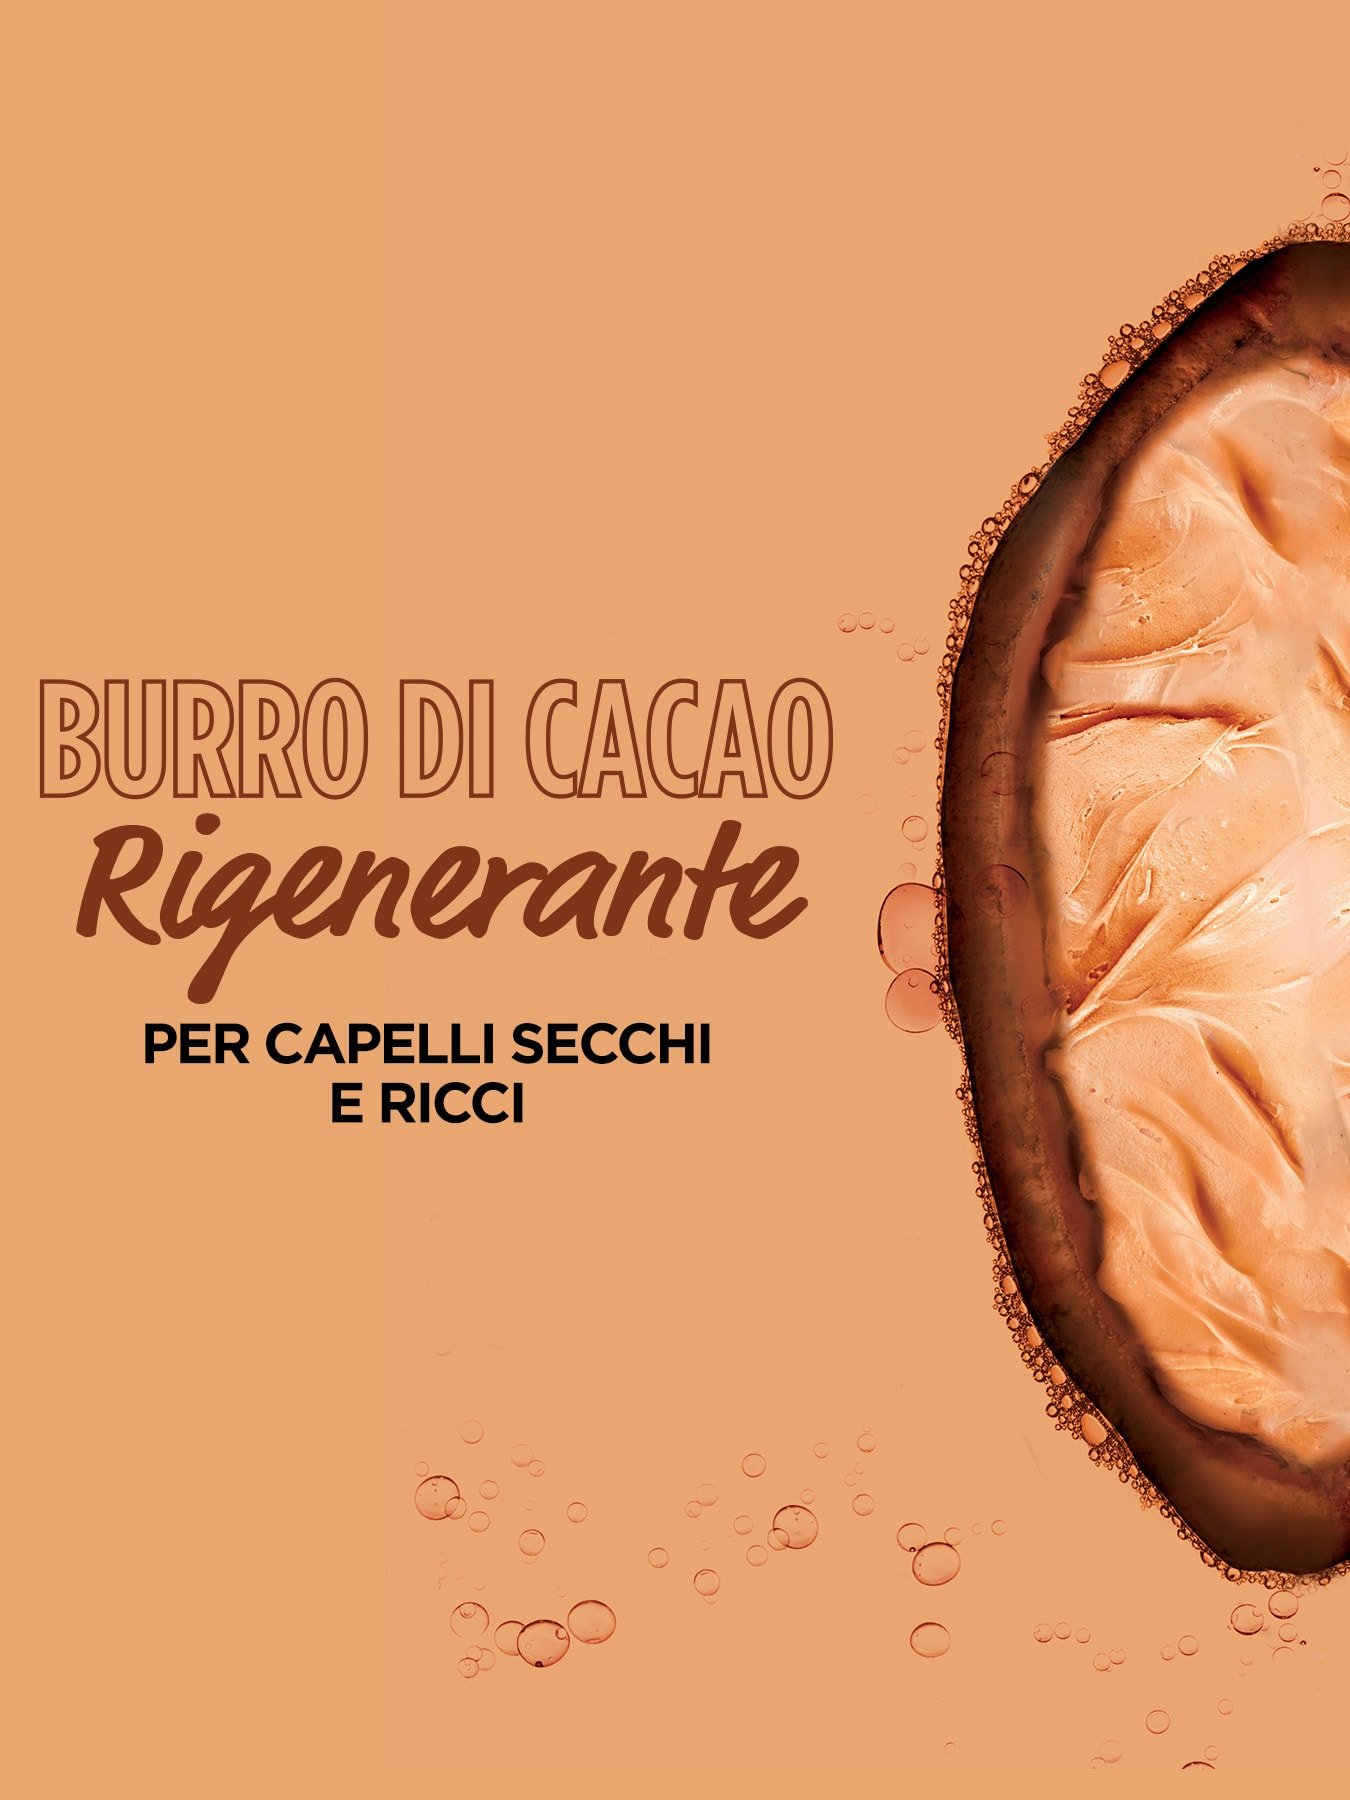 221751   GARNIER Fructis Hairfood Visual Amazon Burro di Cacao 1350x1800 v1 p7